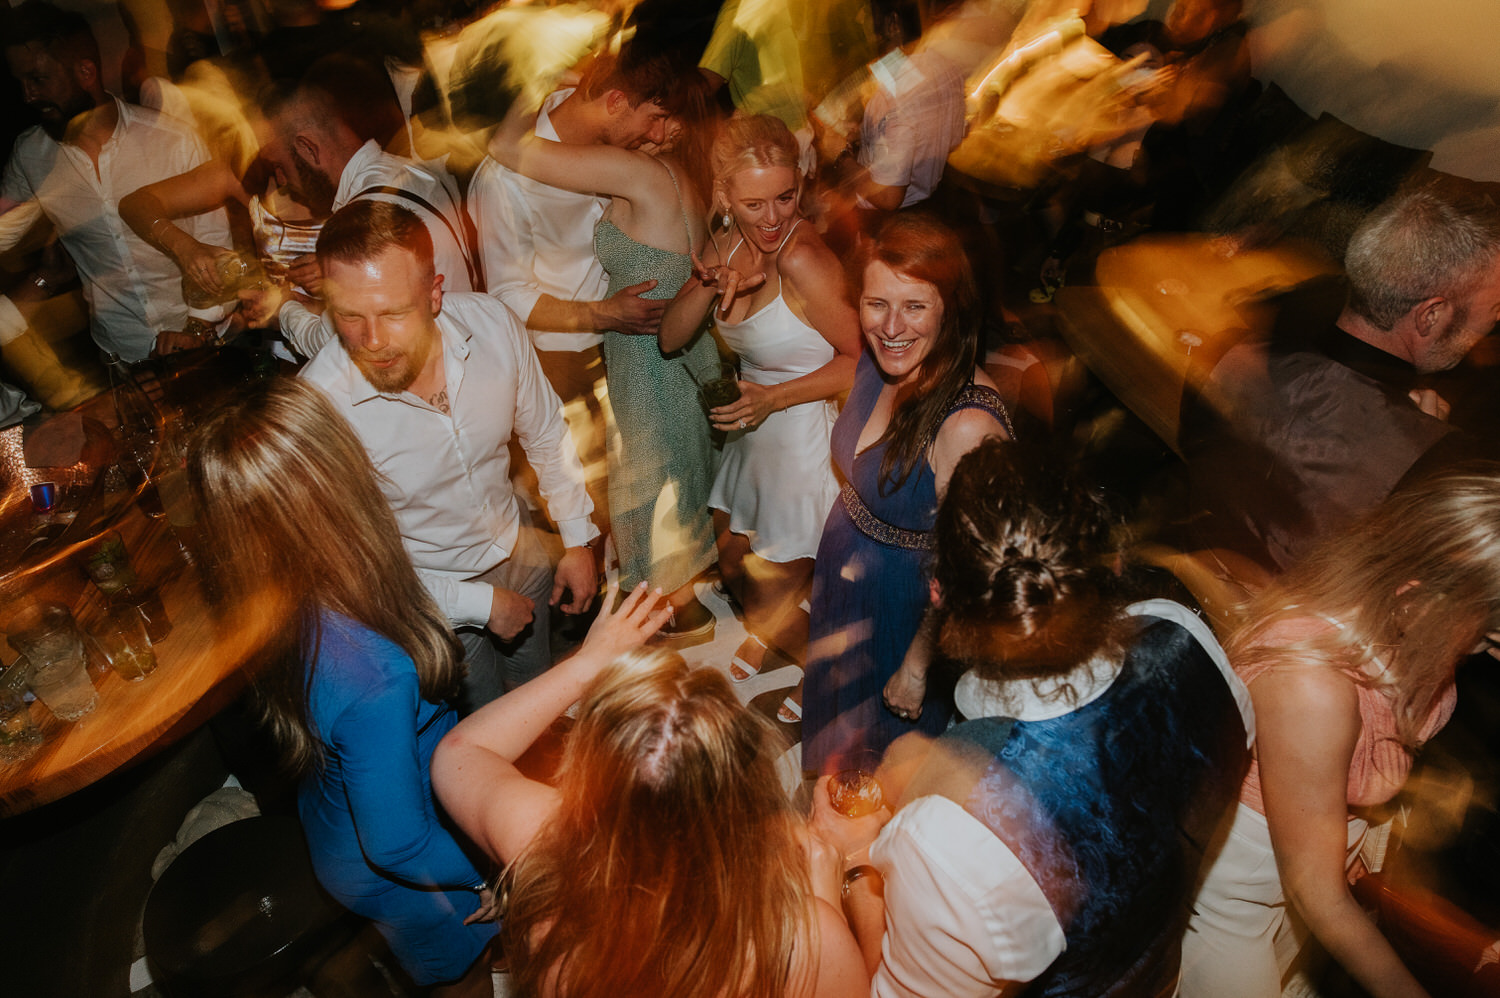 Mykonos wedding photographer: bride and her guests in high spirits on the dance floor at Scarpa bar during her Mykonos wedding celebration.